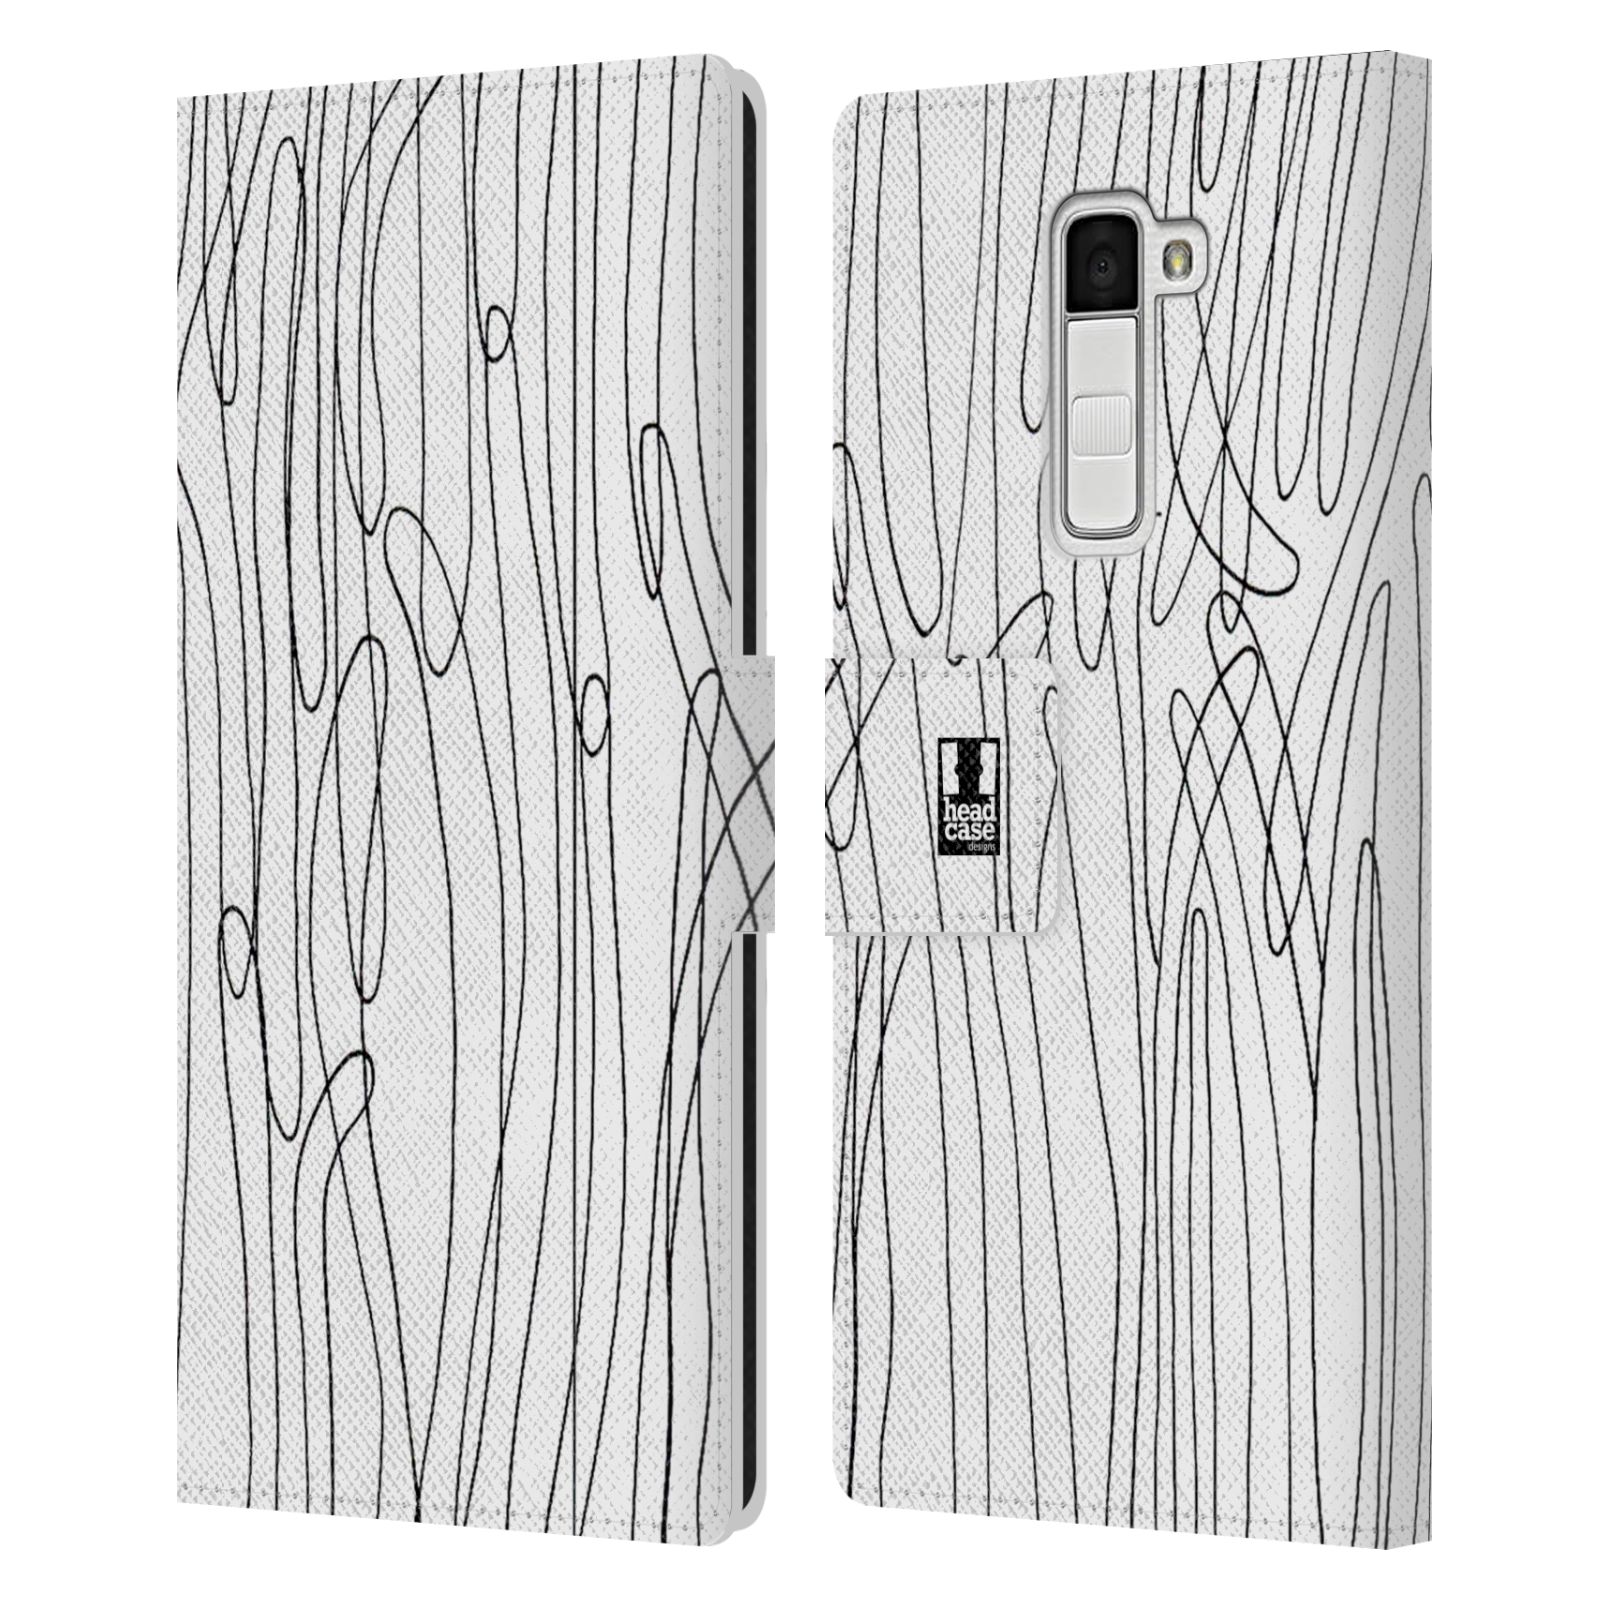 HEAD CASE Flipové pouzdro pro mobil LG K10 kresba a čmáranice vlny černá a bílá